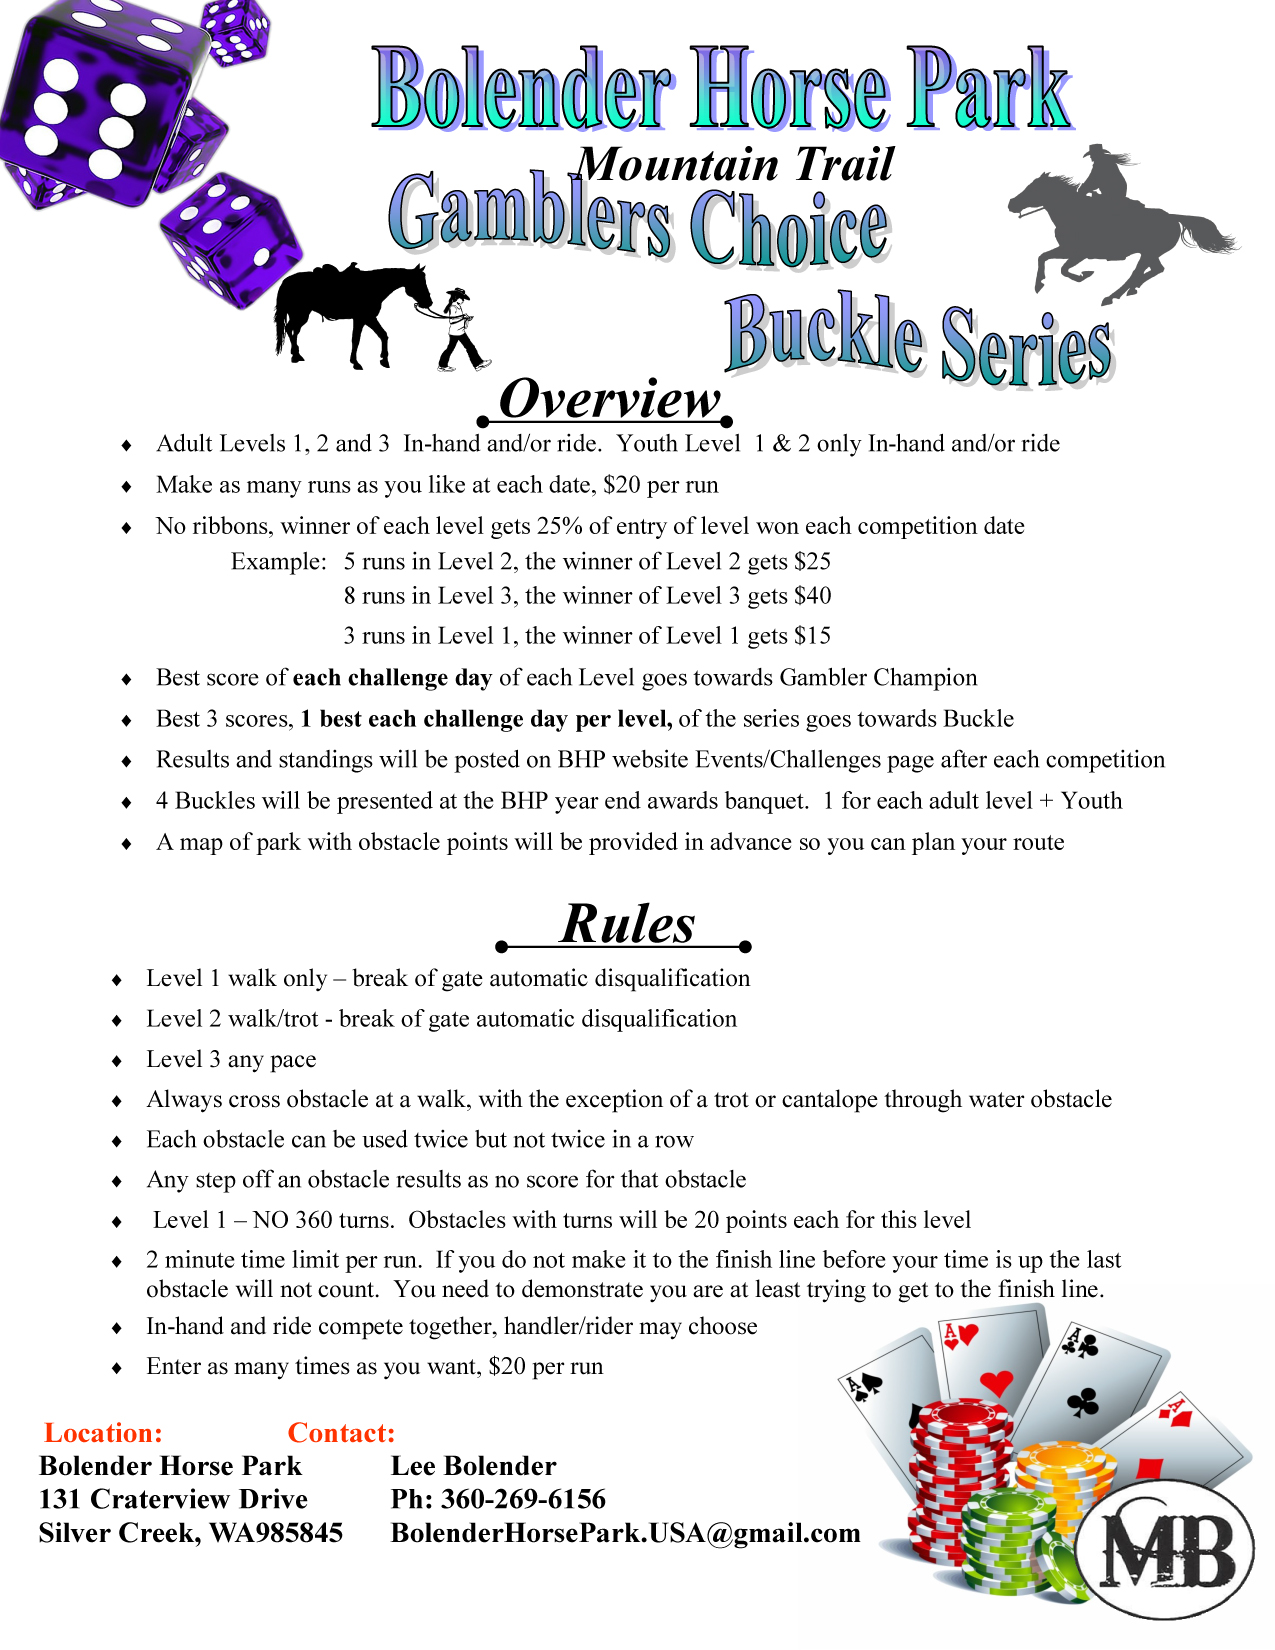 Gamblers Choice Buckle Series at Bolender Horse Park